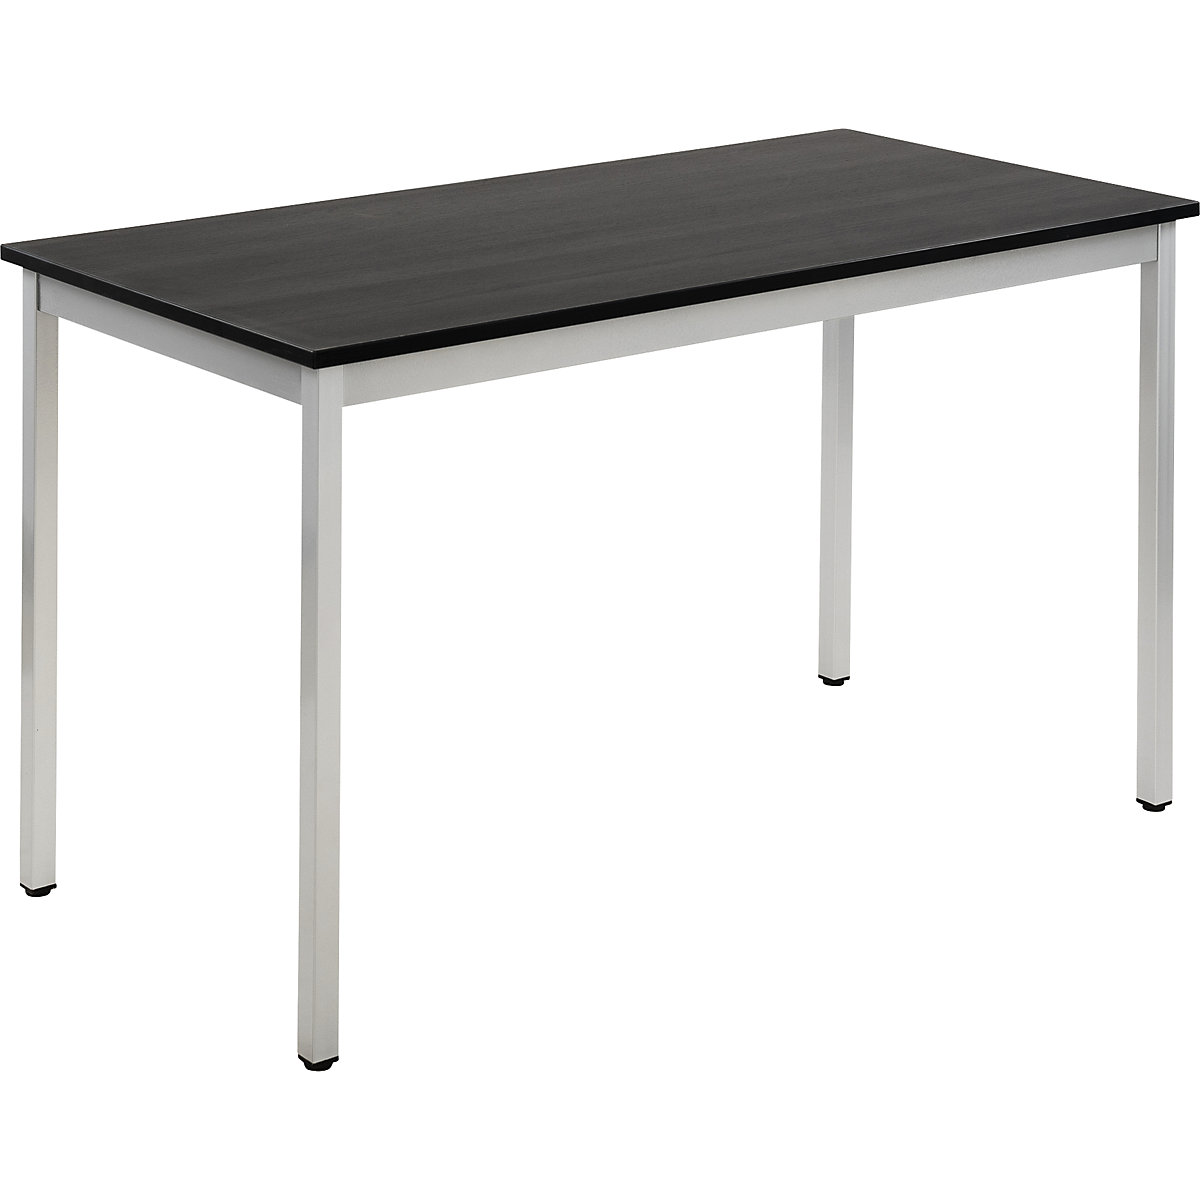 Universele tafel – eurokraft basic, rechthoekig, b x h = 1200 x 740 mm, diepte 600 mm, blad essenhoutdecor donkergrijs, onderstel blank aluminiumkleurig